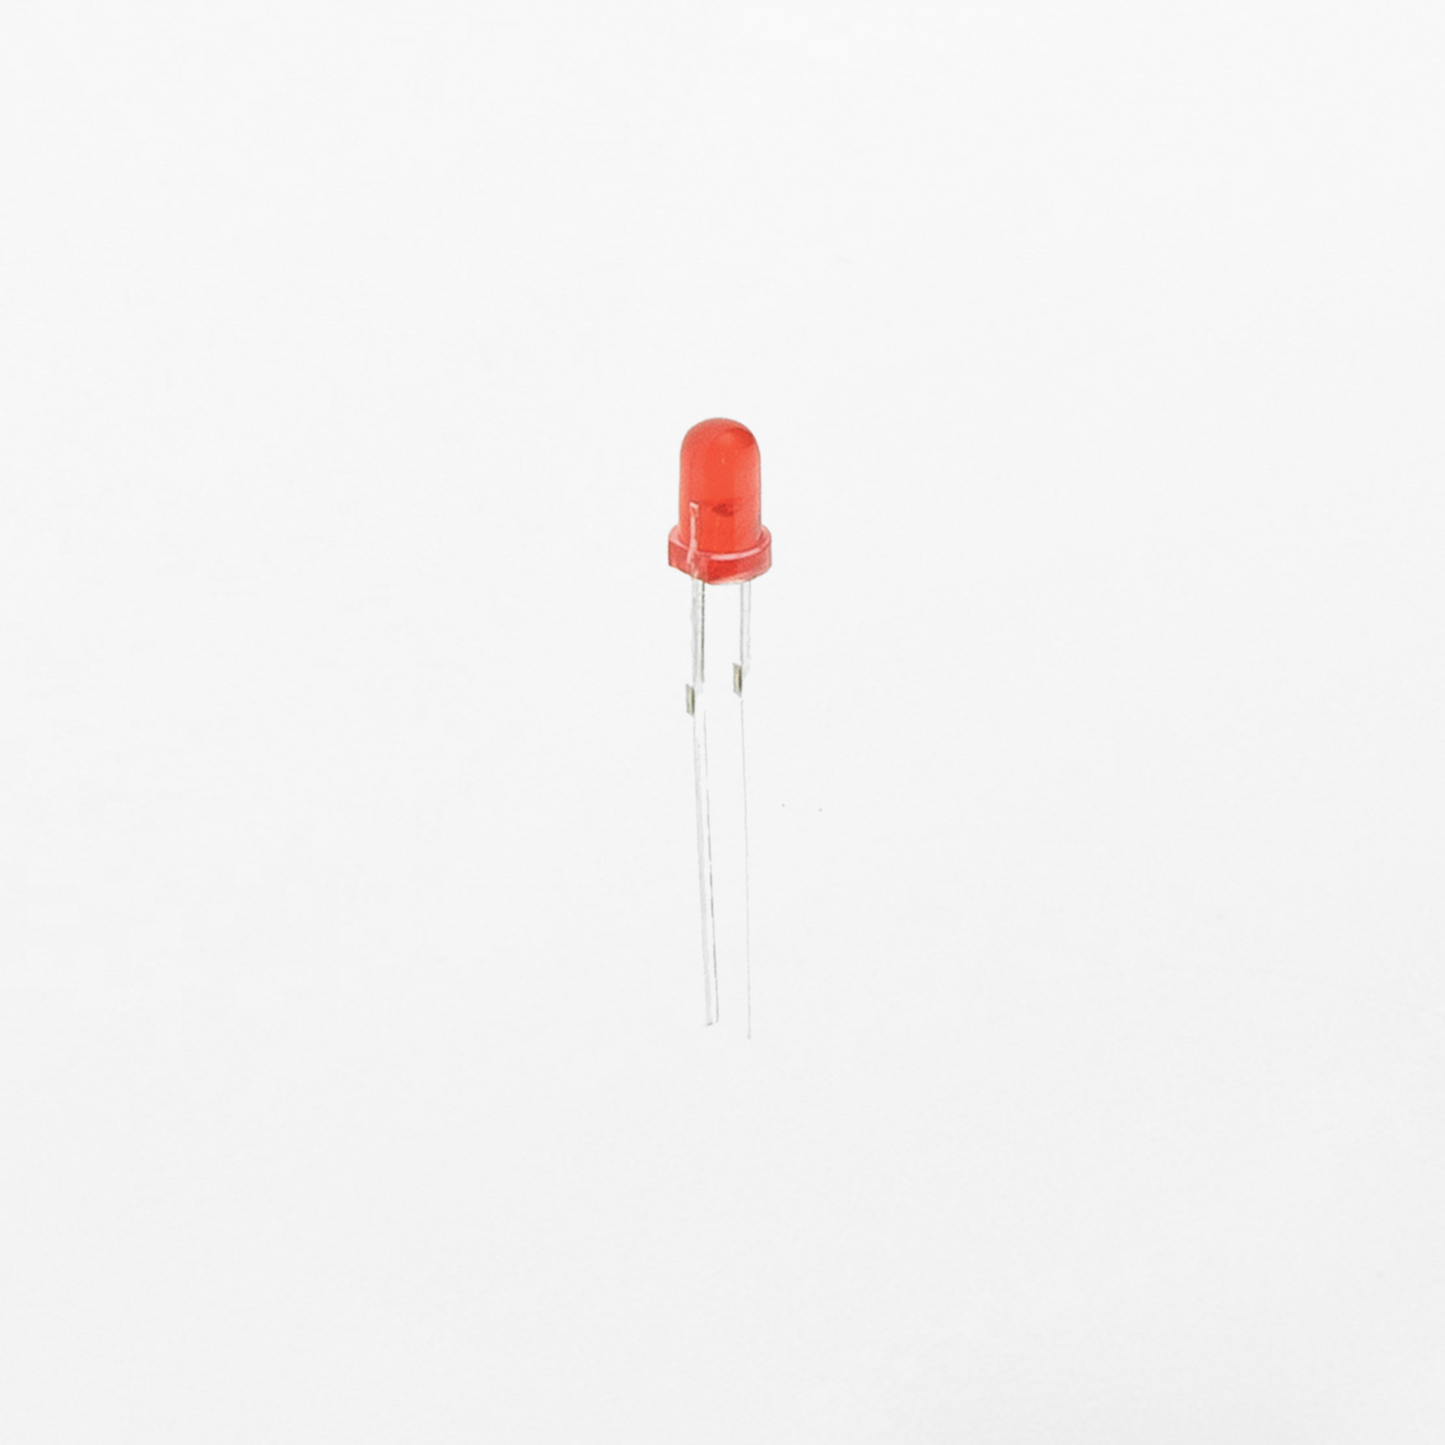 LED - Red 3mm (25 Pack)